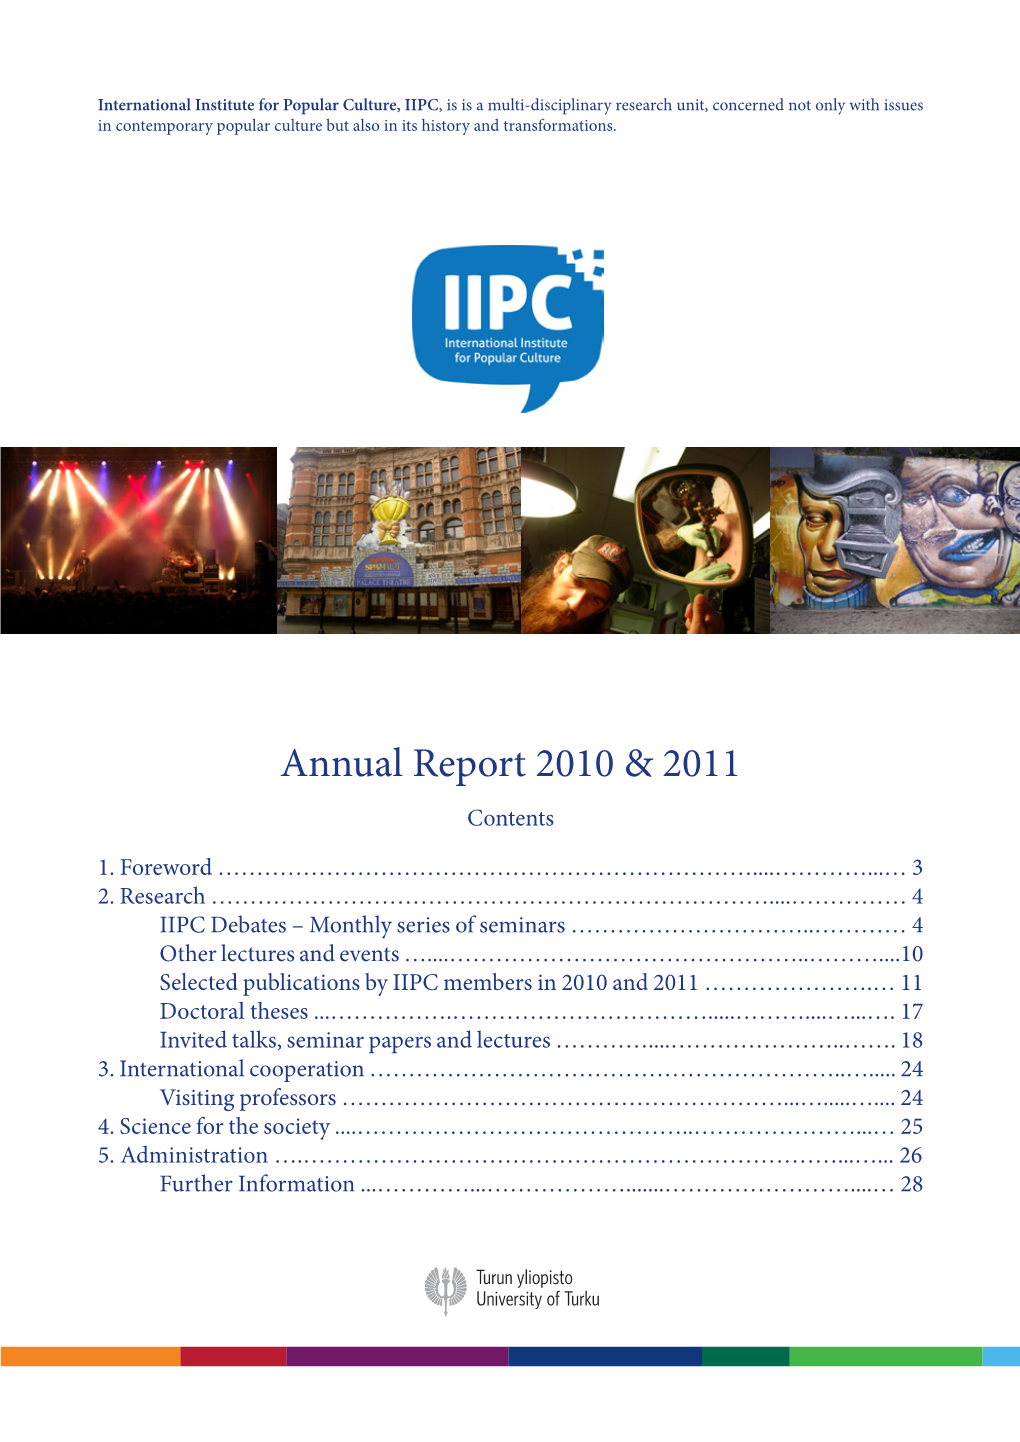 IIPC Annual Report 2010-2011